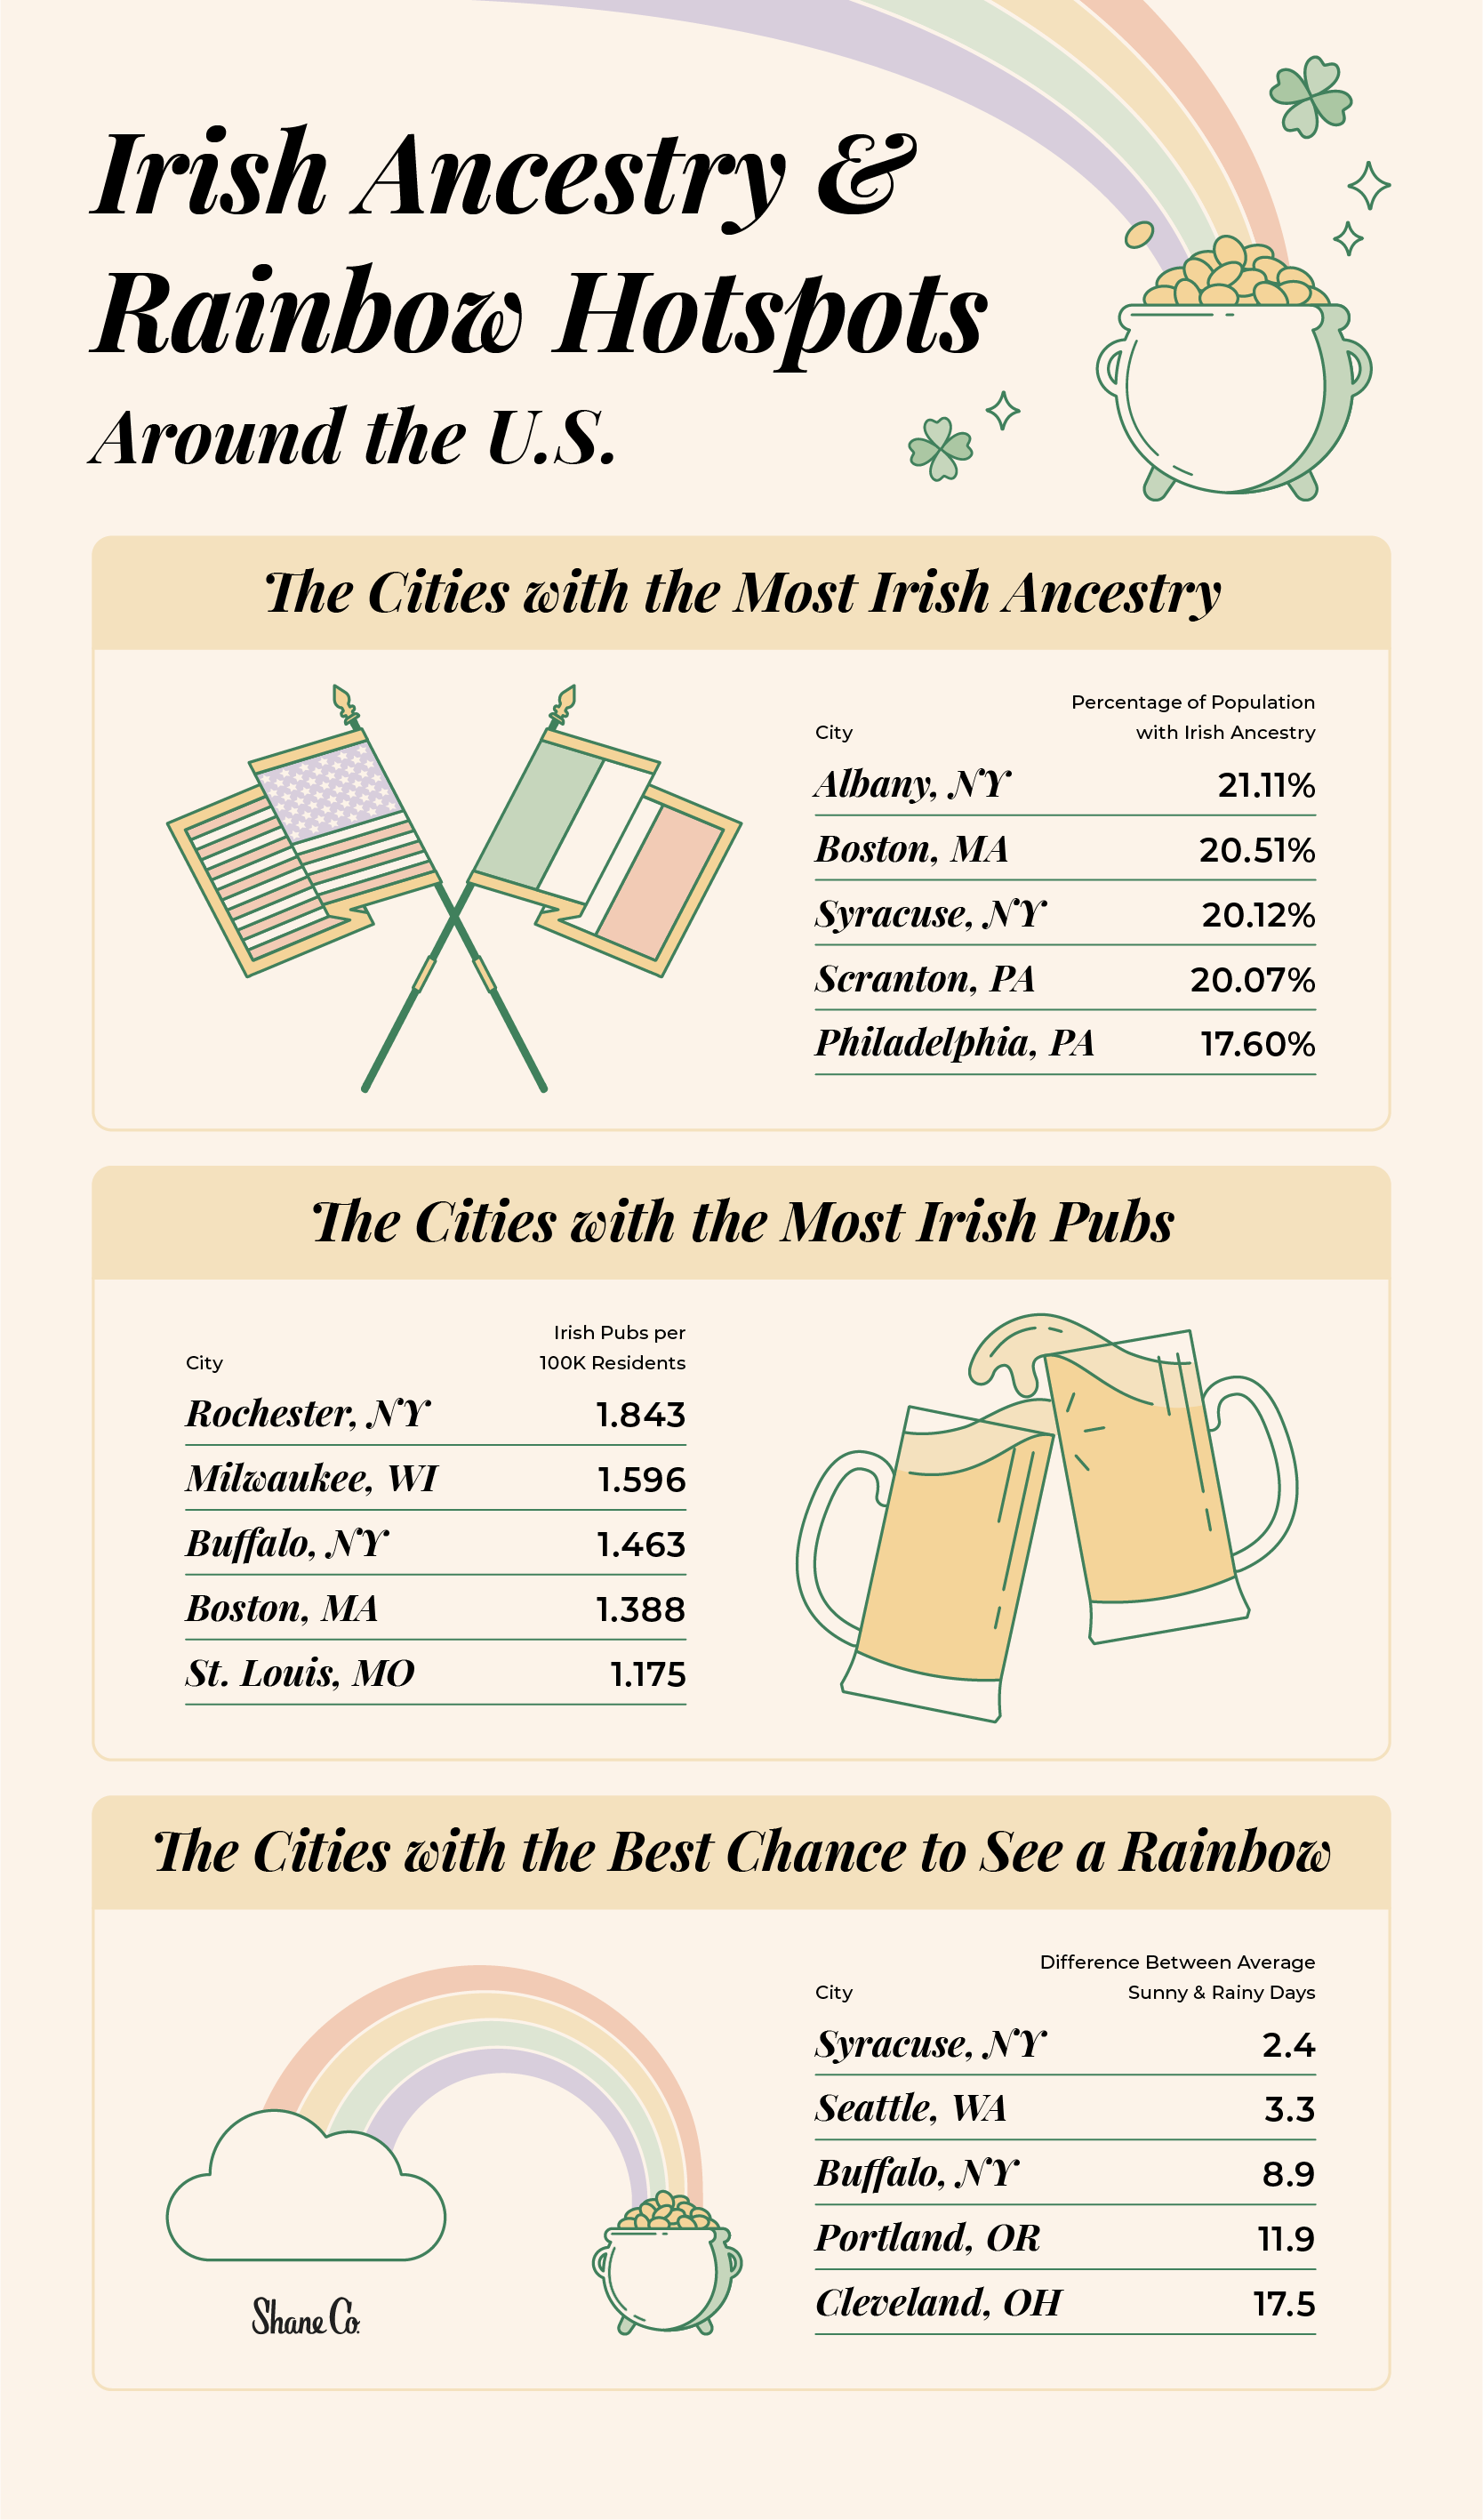 A graphic ranking the U.S. cities with the most Irish ancestry, Irish pubs, and rainbow likelihood